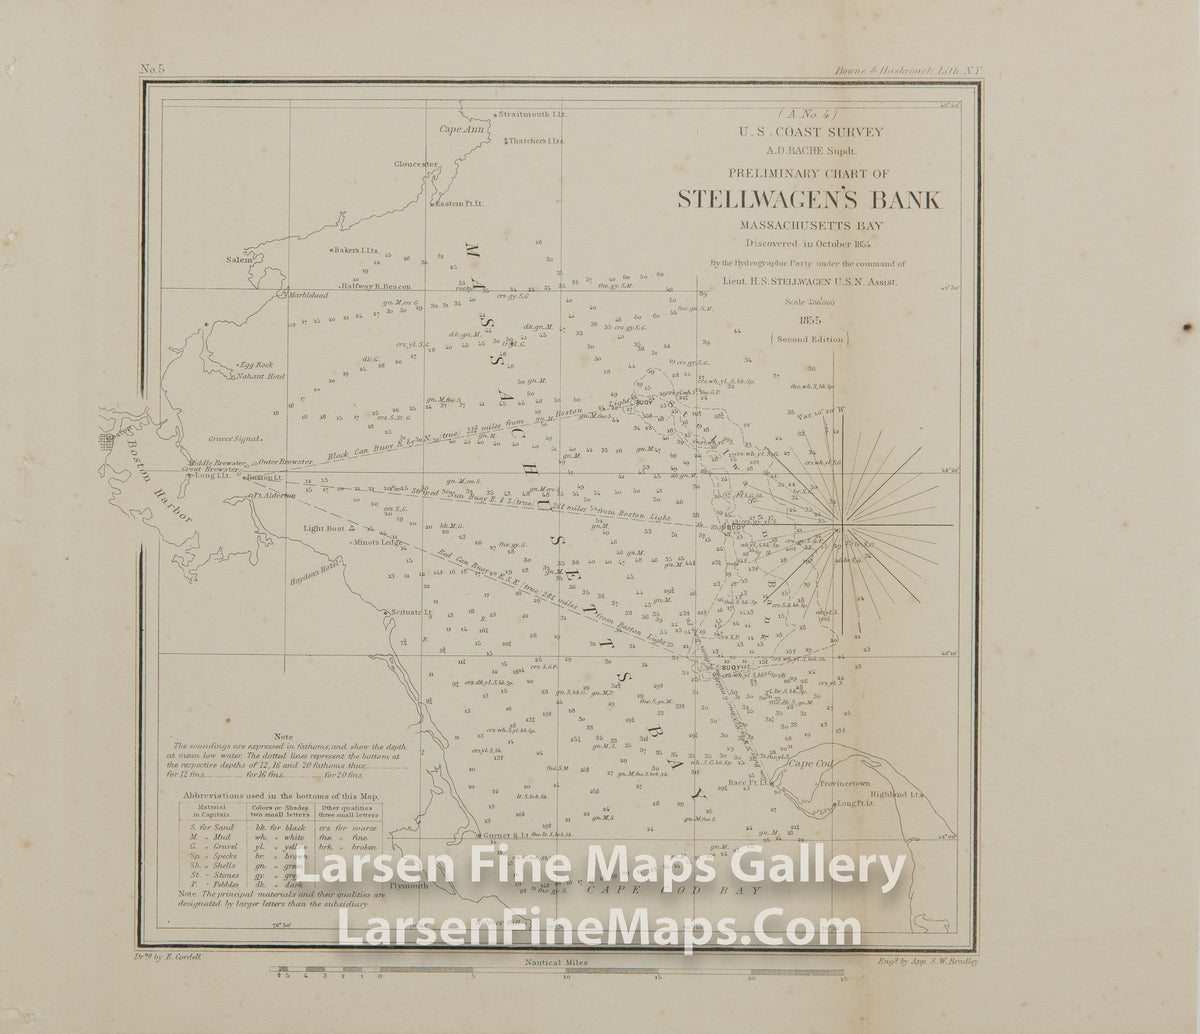 Preliminary Chart of Stellwagen's Bank Massachusetts Bay Discovered in 1854